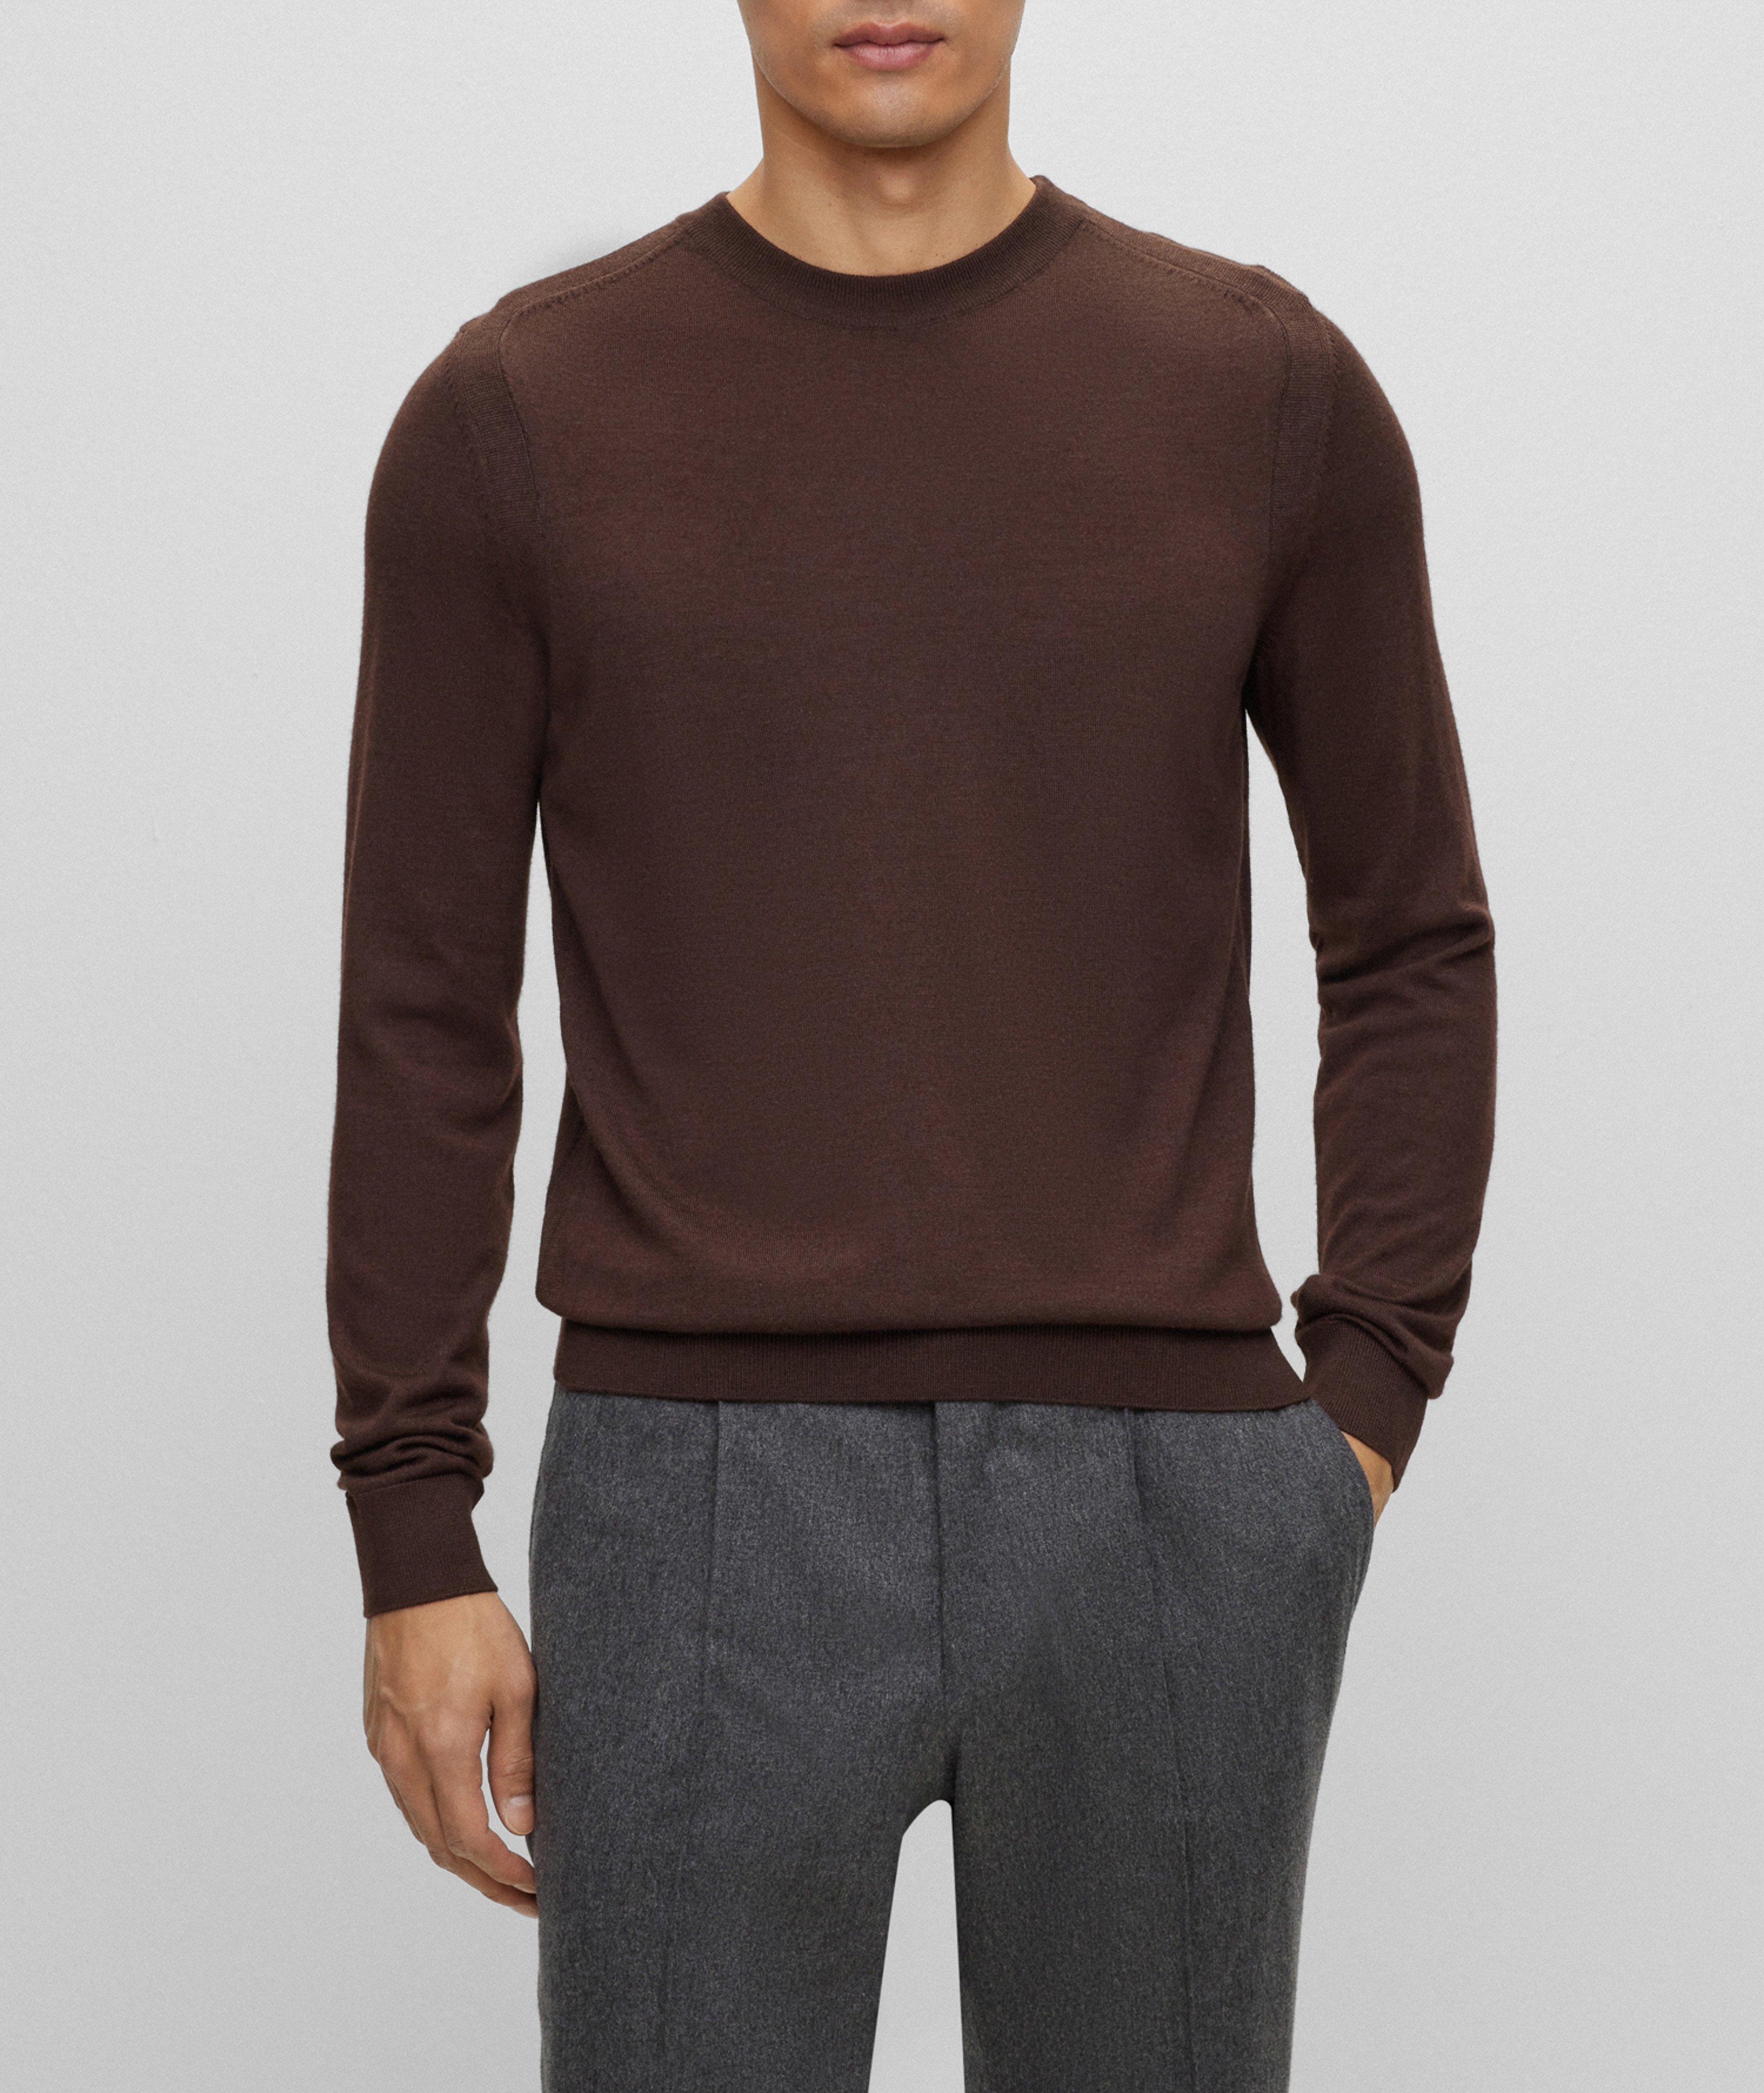 Wool, Silk & Cashmere Sweater image 1